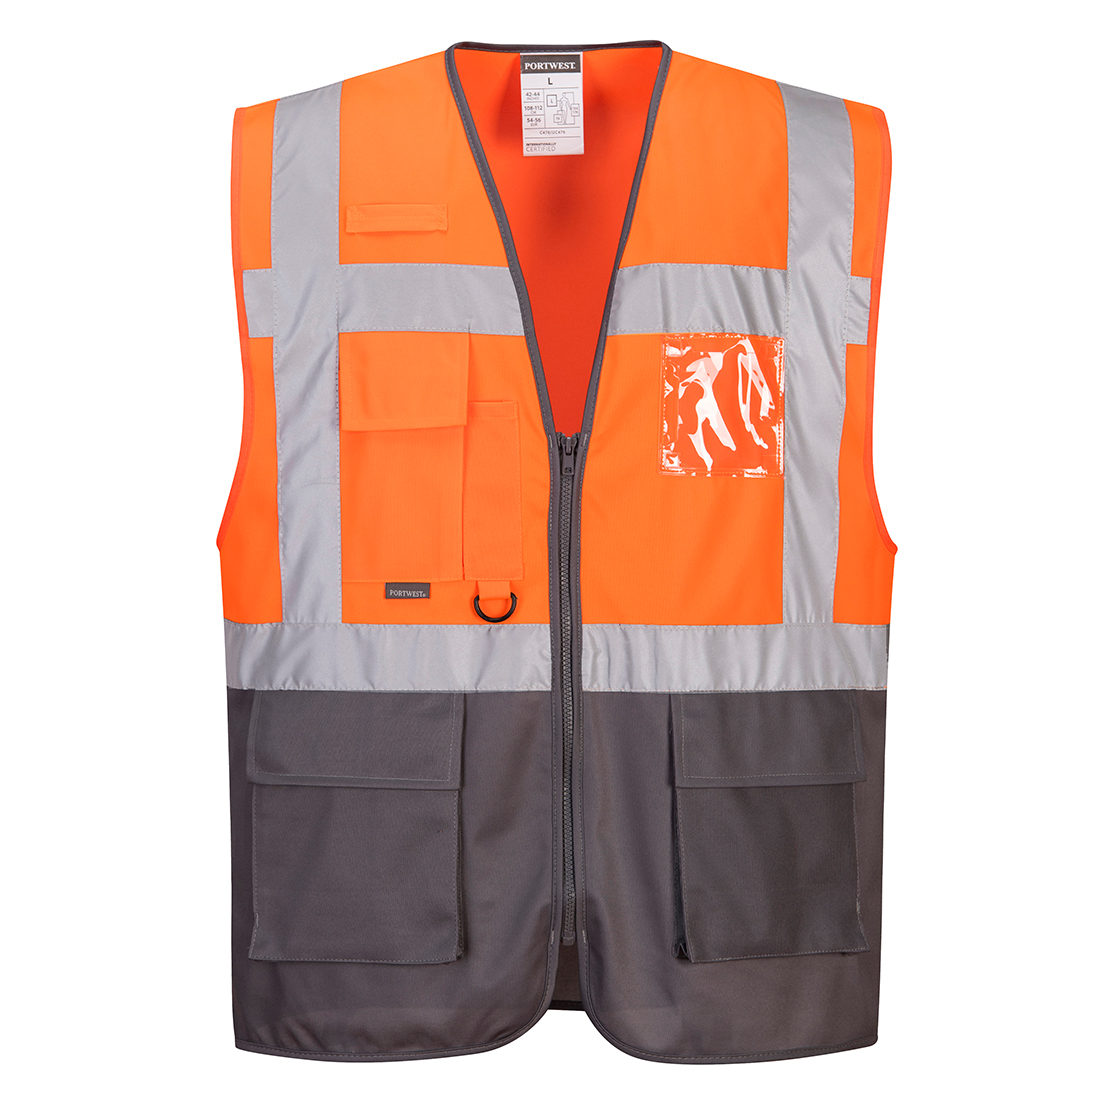 Warsaw Executive Vest - Orange/Grey